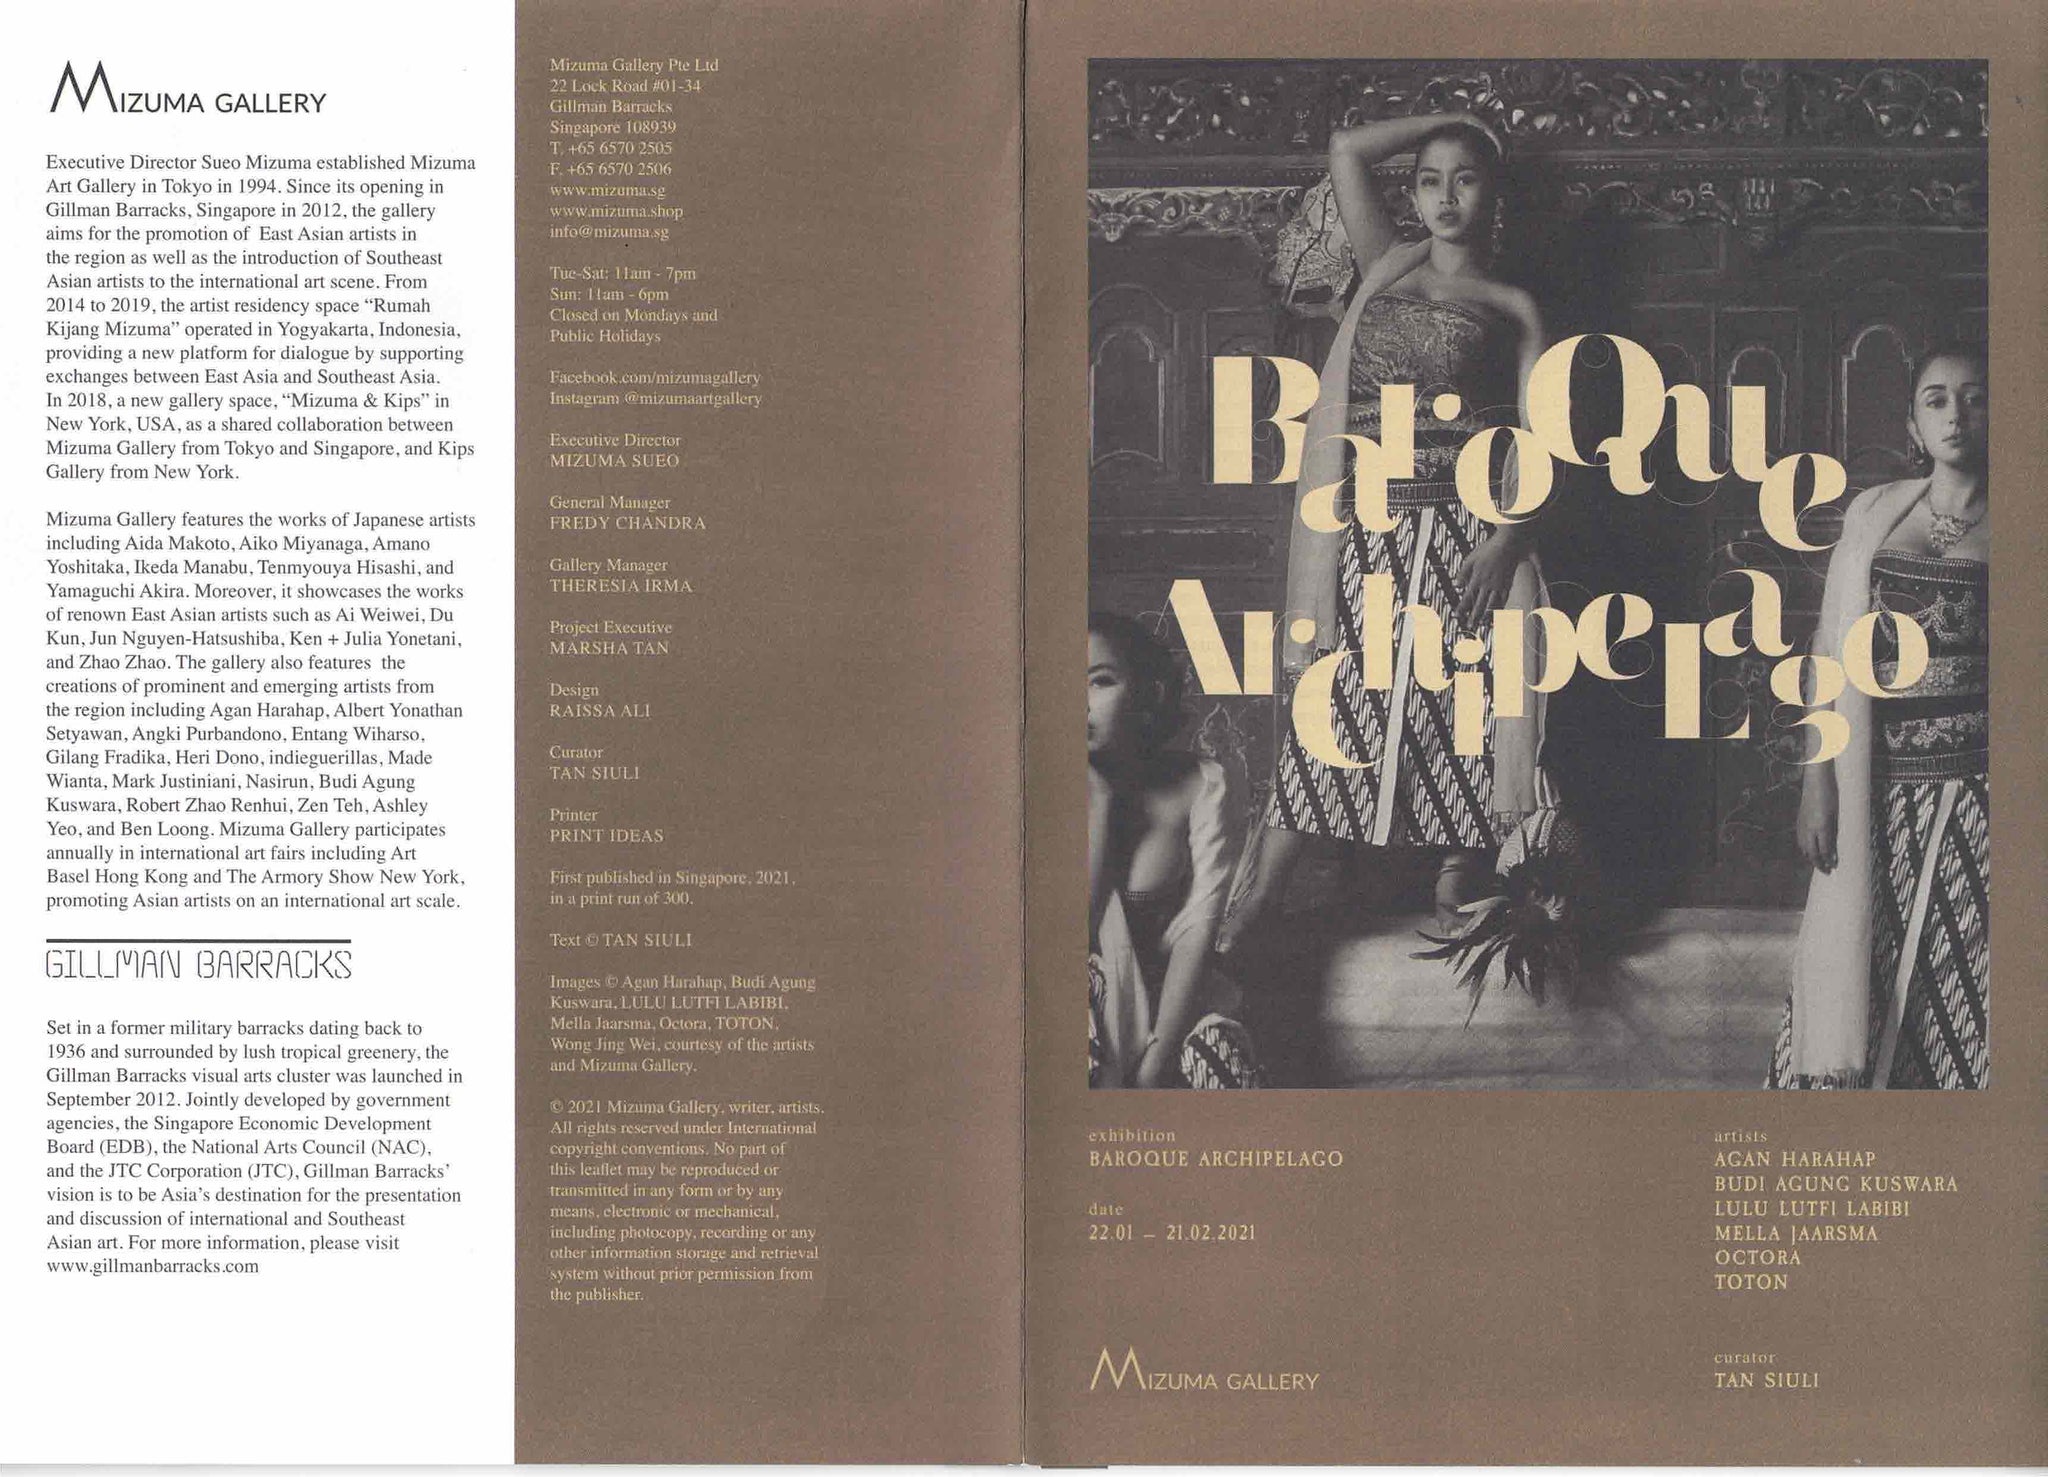 Baroque Archipelago Exhibition Catalogue